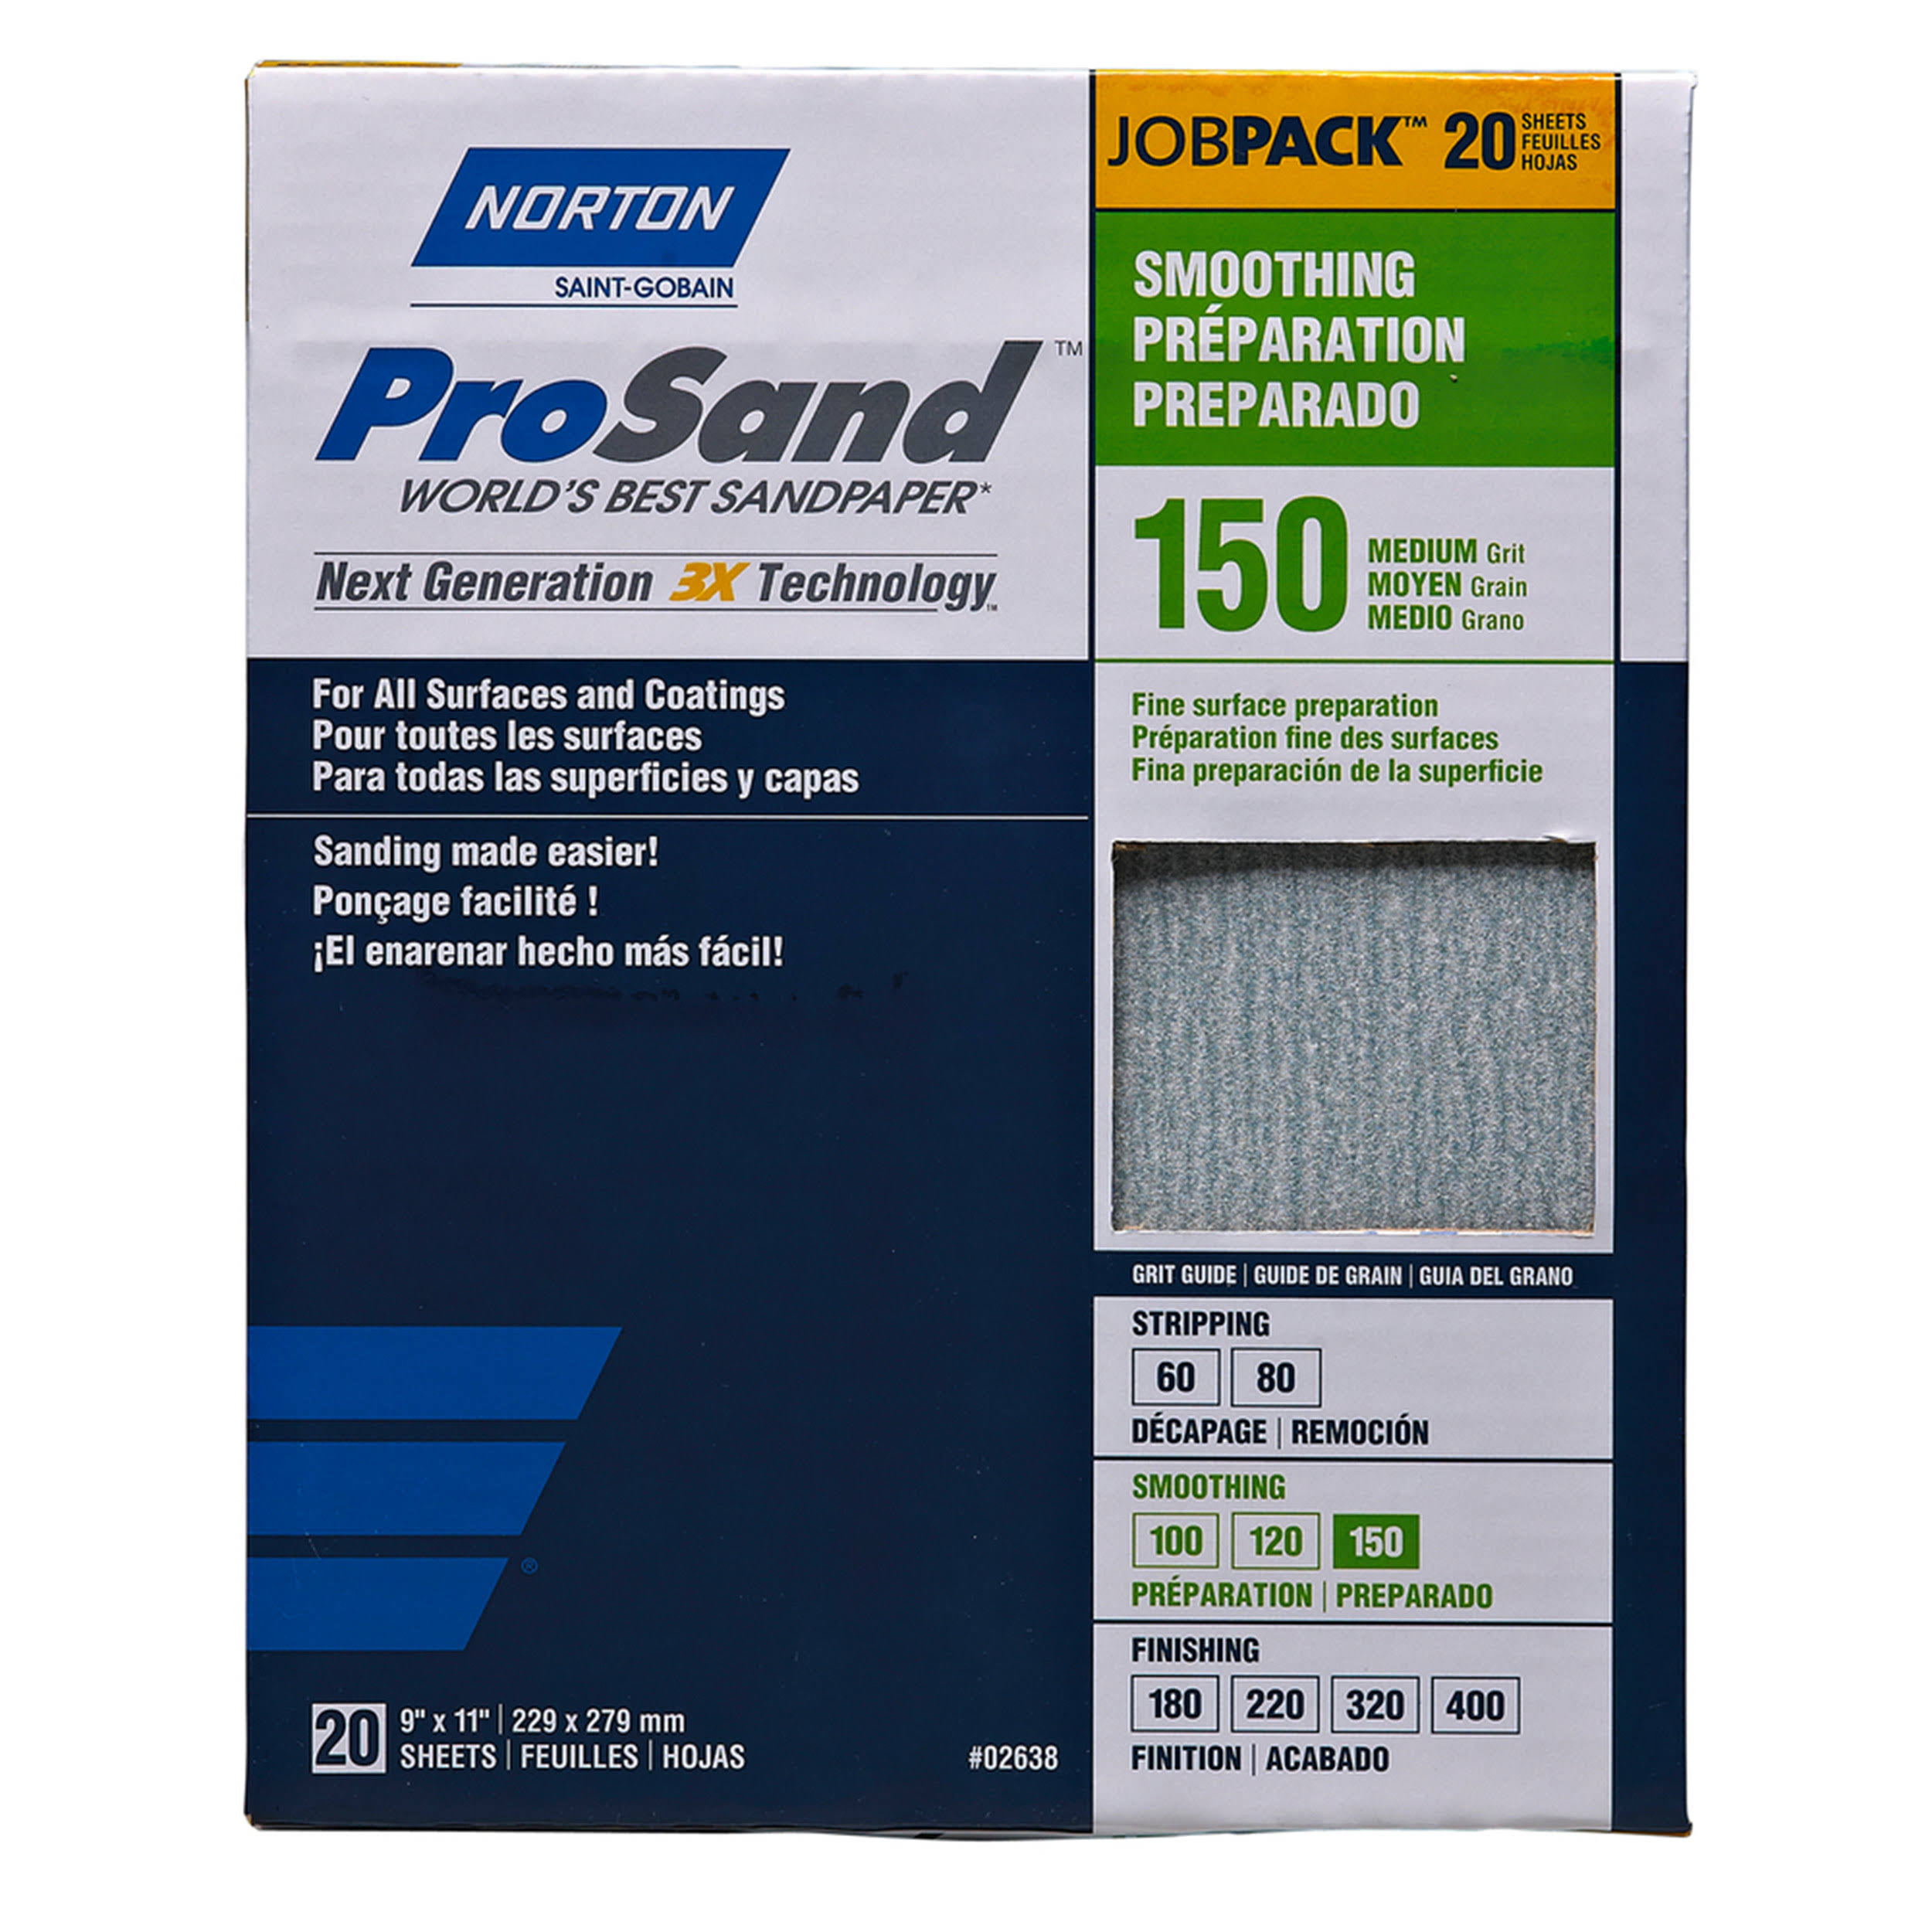 Norton Prosand 11 In. l x 9 In. w 150 Grit Aluminum Oxide Sandpaper 20 pk Saint-Gobain Abrasives Inc